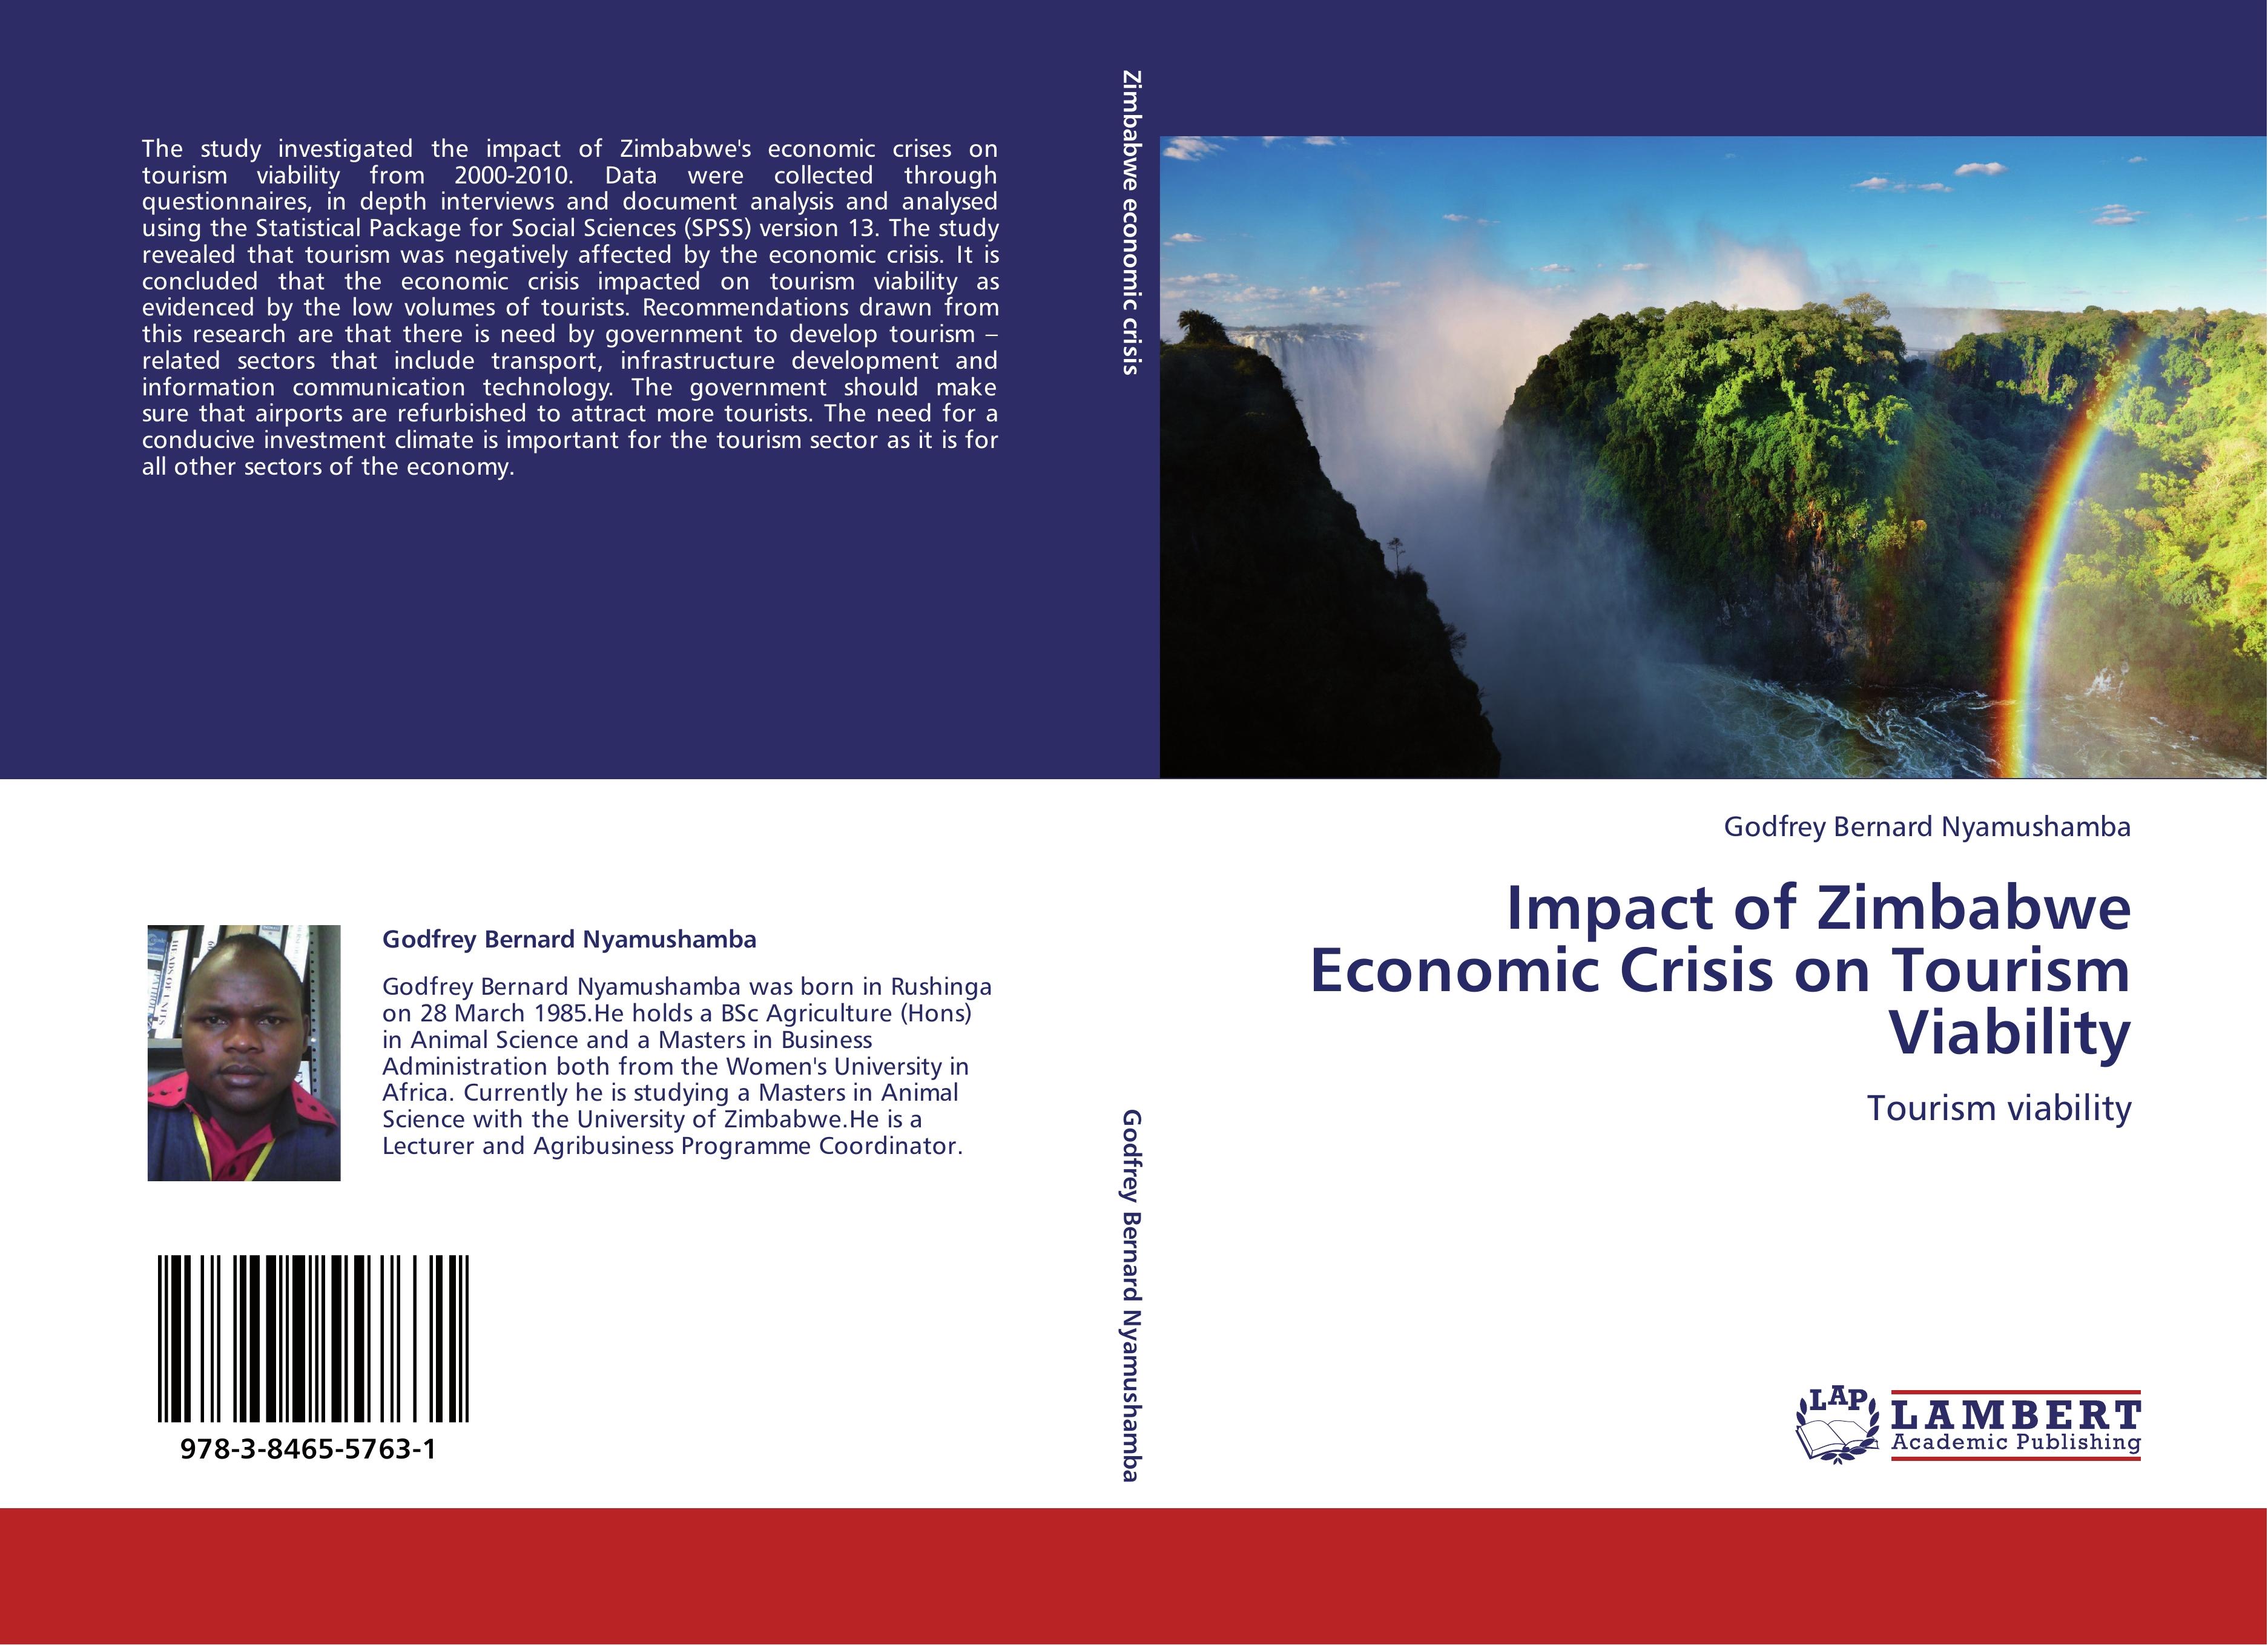 Impact of Zimbabwe Economic Crisis on Tourism Viability / Tourism viability / Godfrey Bernard Nyamushamba / Taschenbuch / Paperback / 120 S. / Englisch / 2011 / LAP LAMBERT Academic Publishing - Nyamushamba, Godfrey Bernard